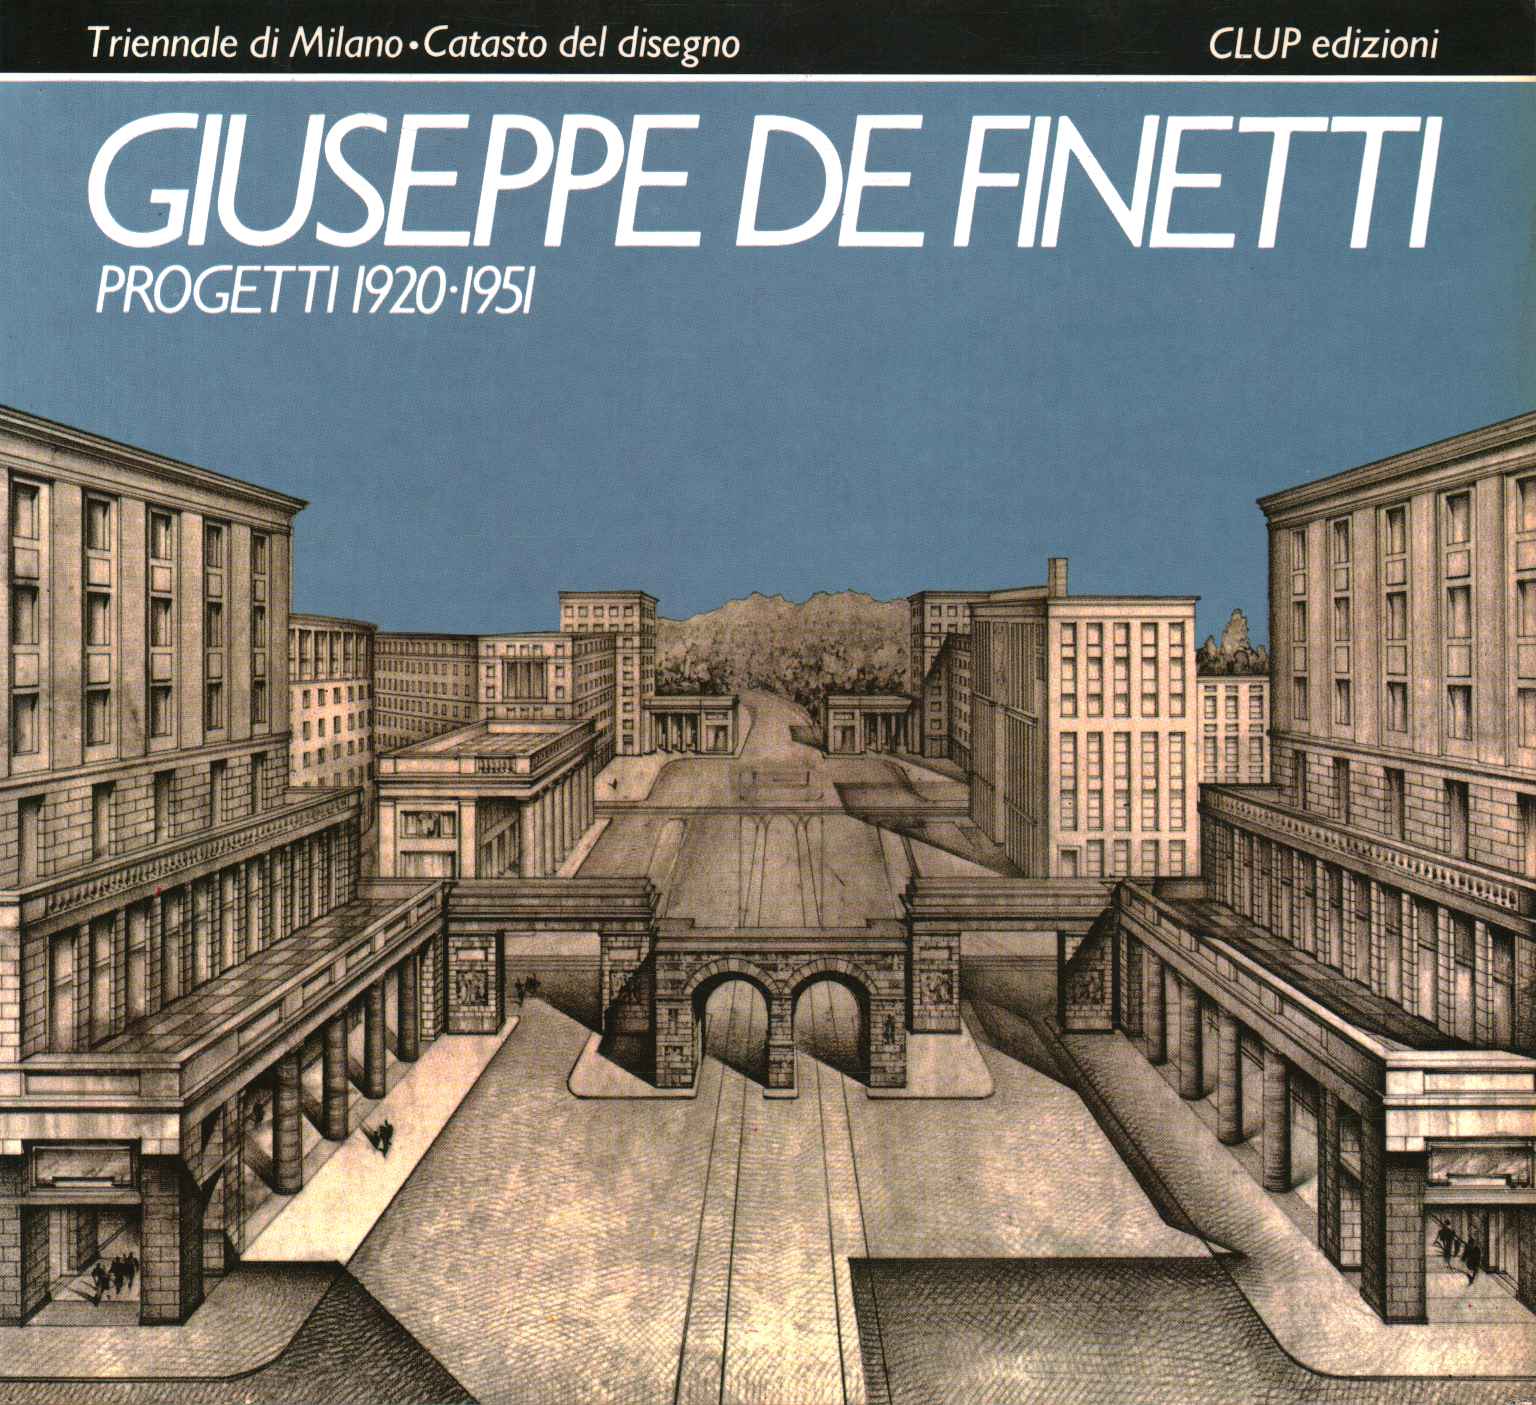 Giuseppe De Finetti. Projekte 1920-1951